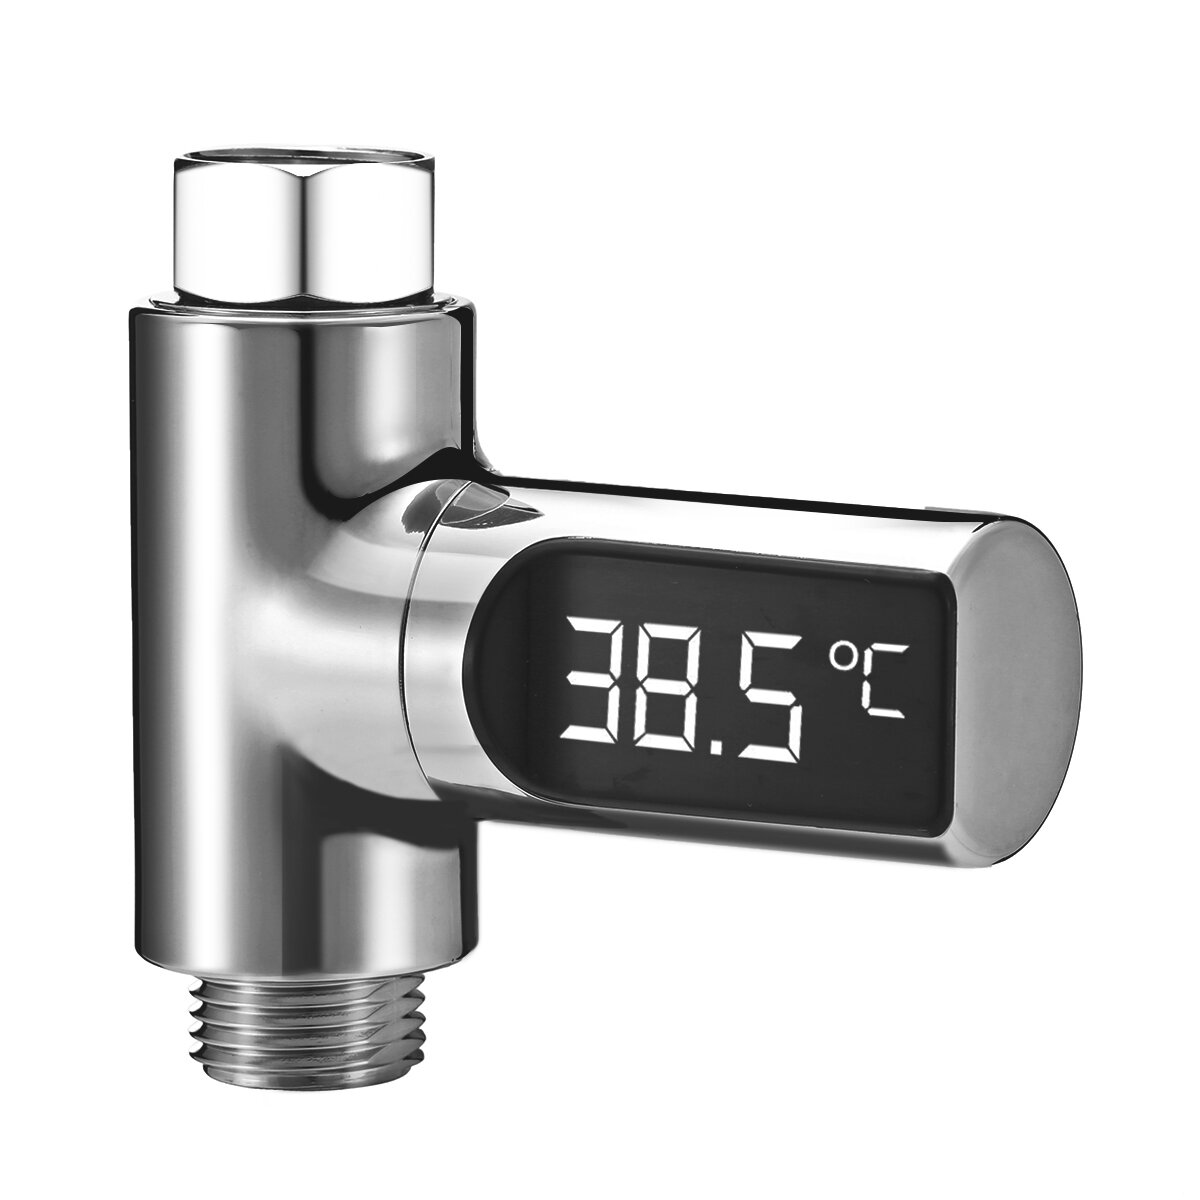 LW-101 LED-display Home Waterdouche Thermometer Flow Zelfopwekkende elektriciteit Watertemperatuurme